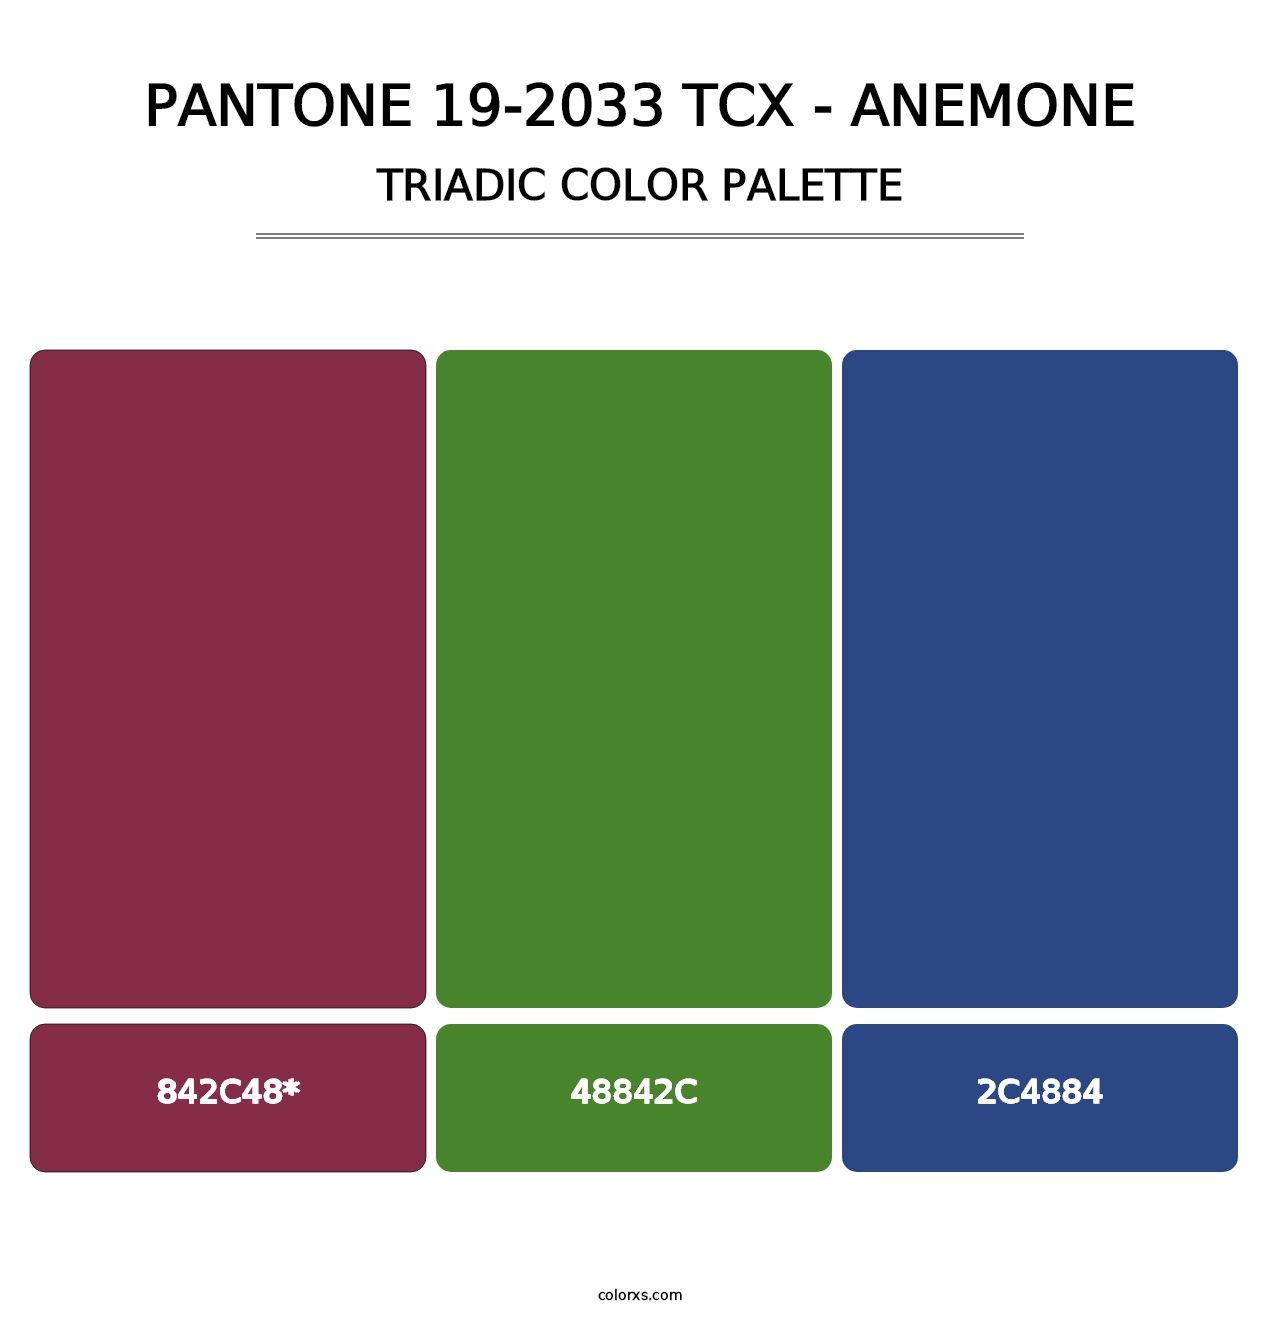 PANTONE 19-2033 TCX - Anemone - Triadic Color Palette